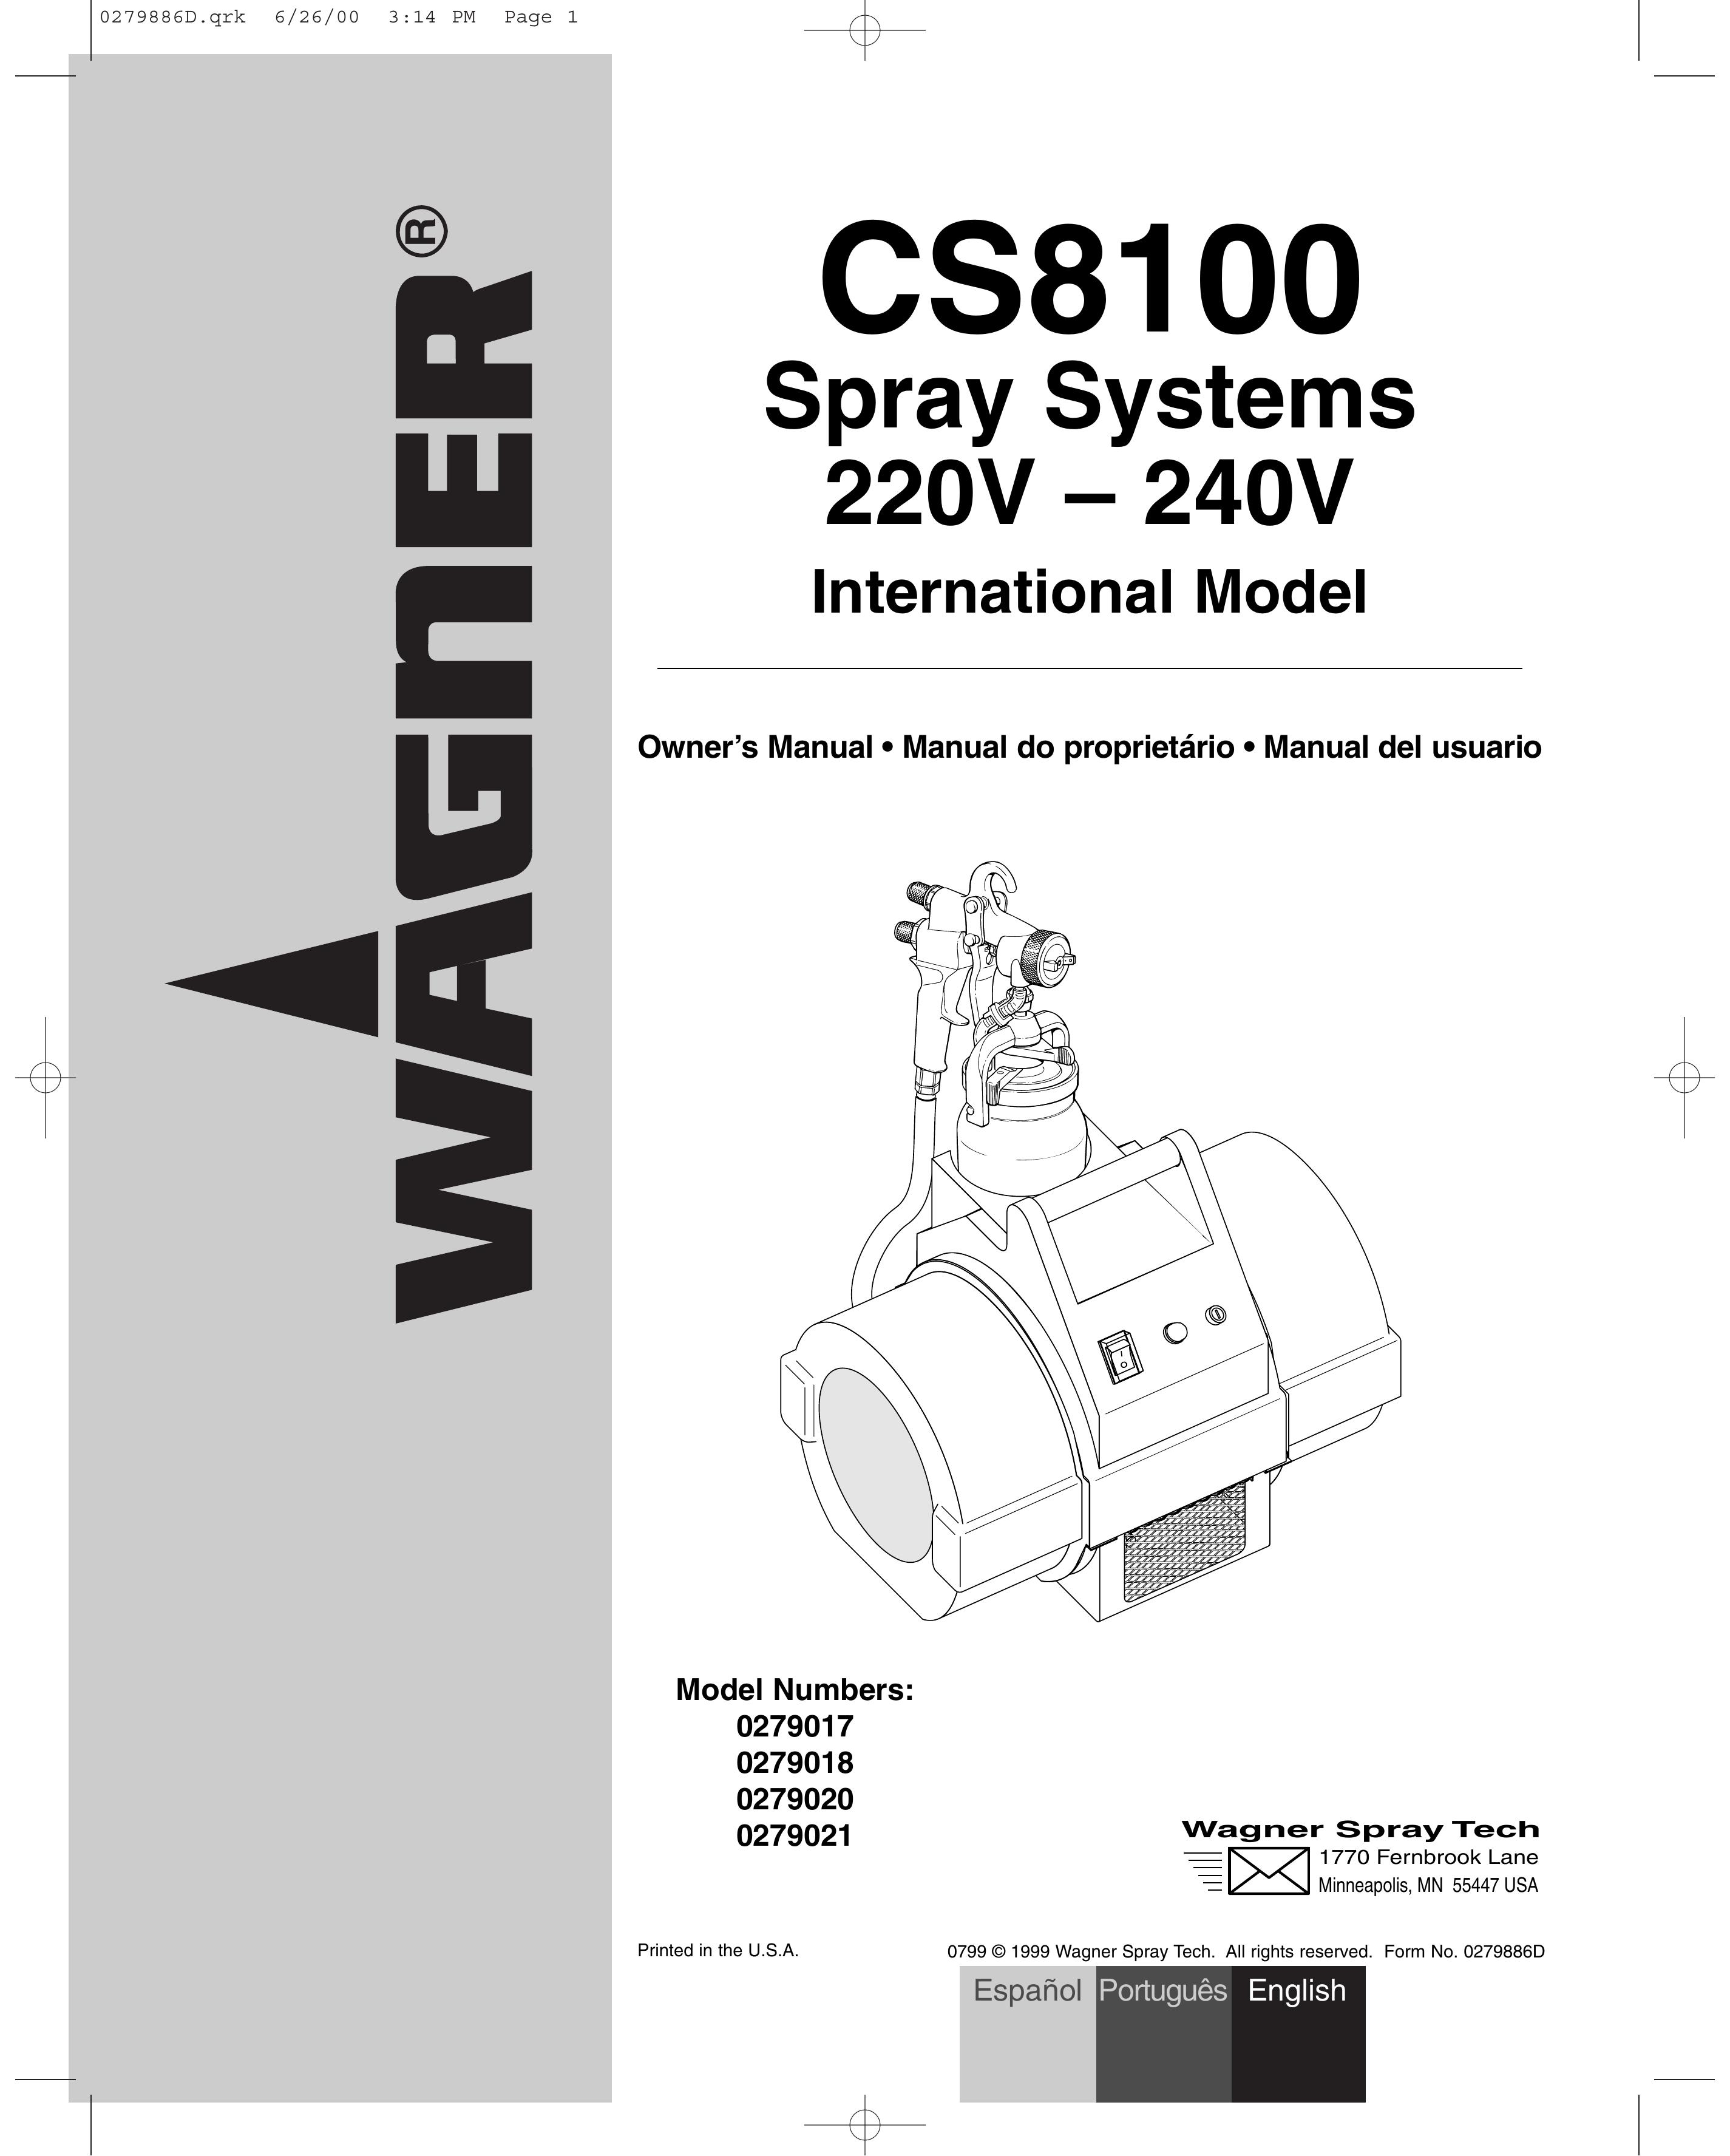 Wagner SprayTech 279018 Lawn Mower Accessory User Manual